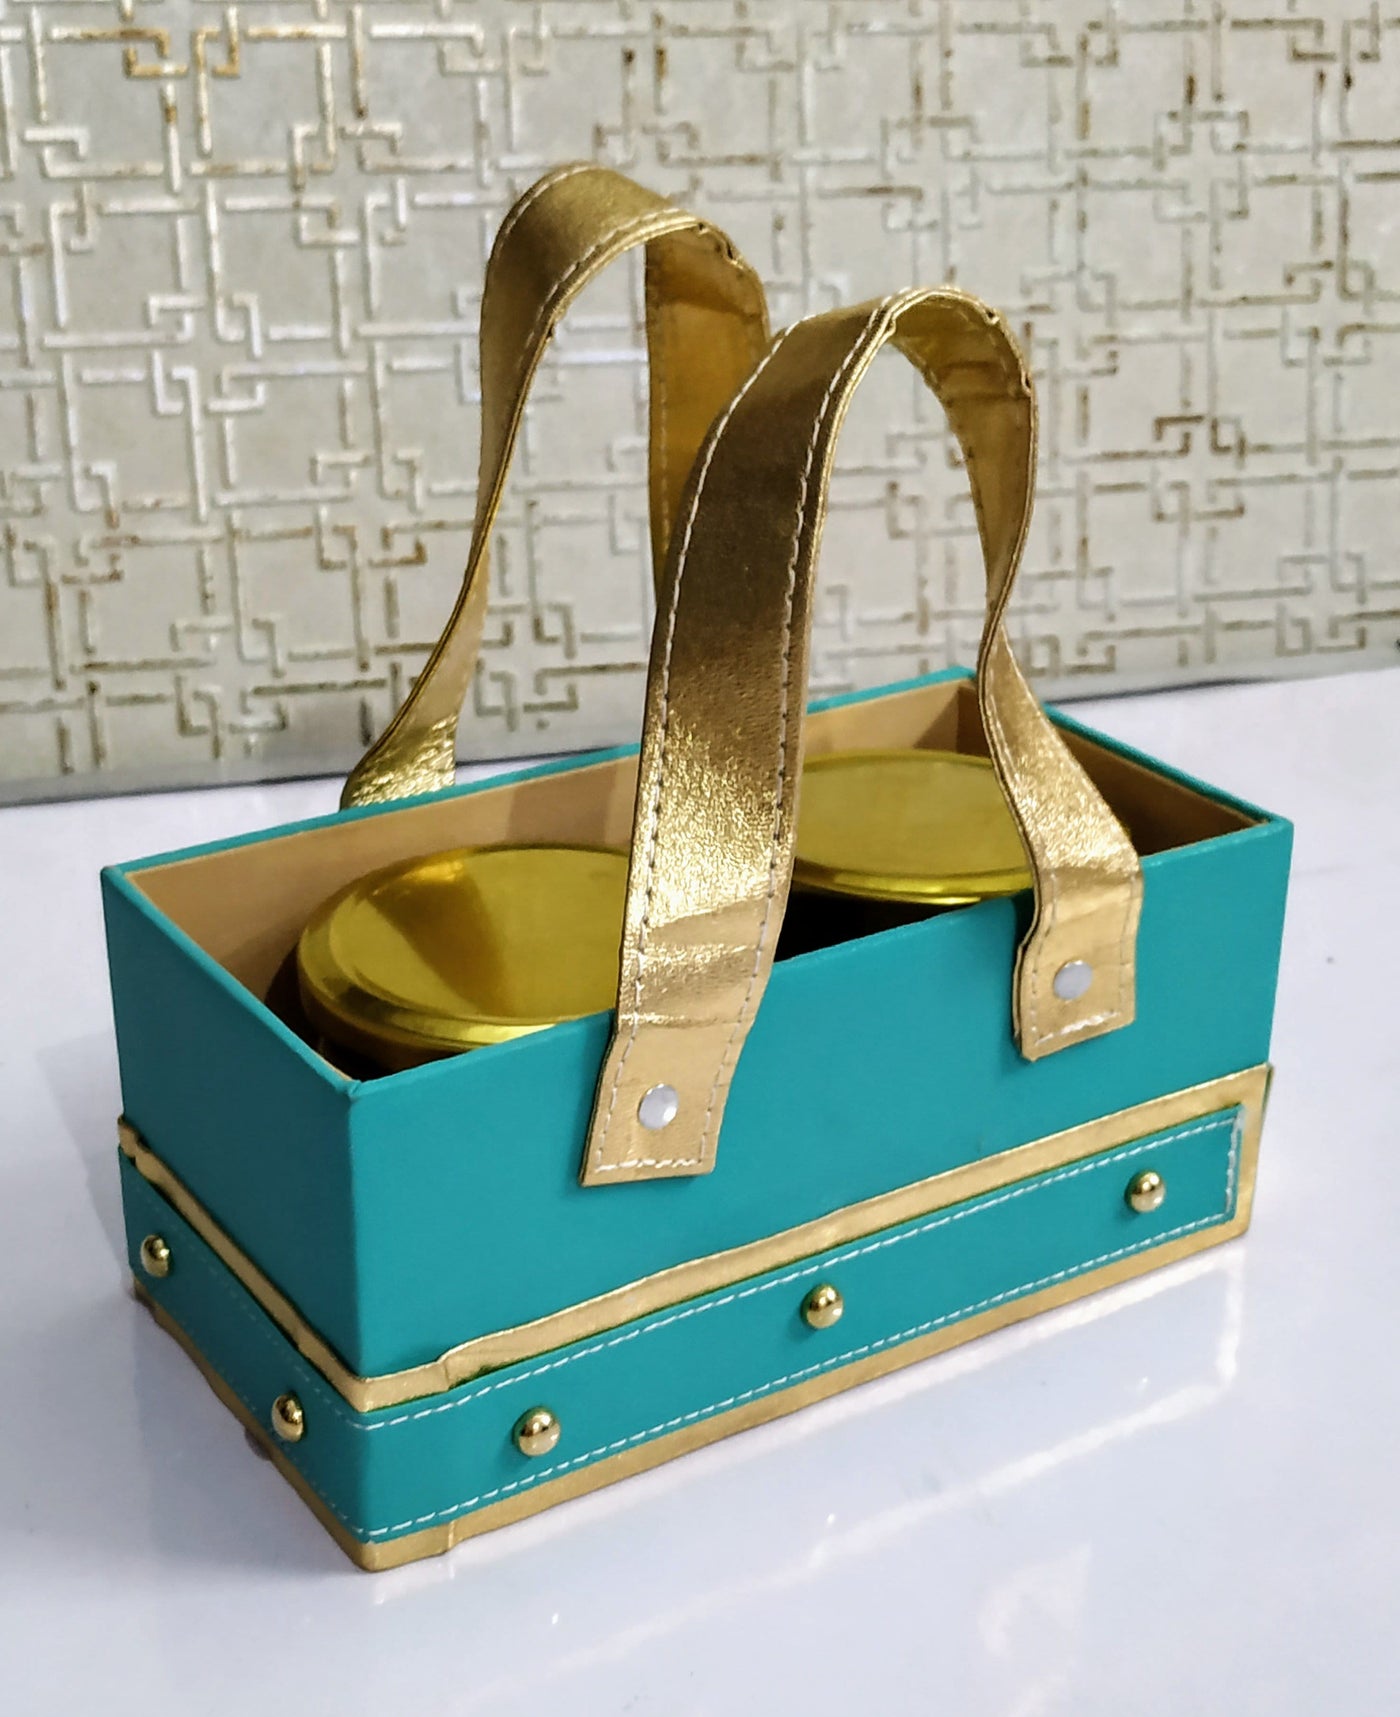 new jaipur handicraft gift baskets lamansh pack of 1 empty room gift hamper basket